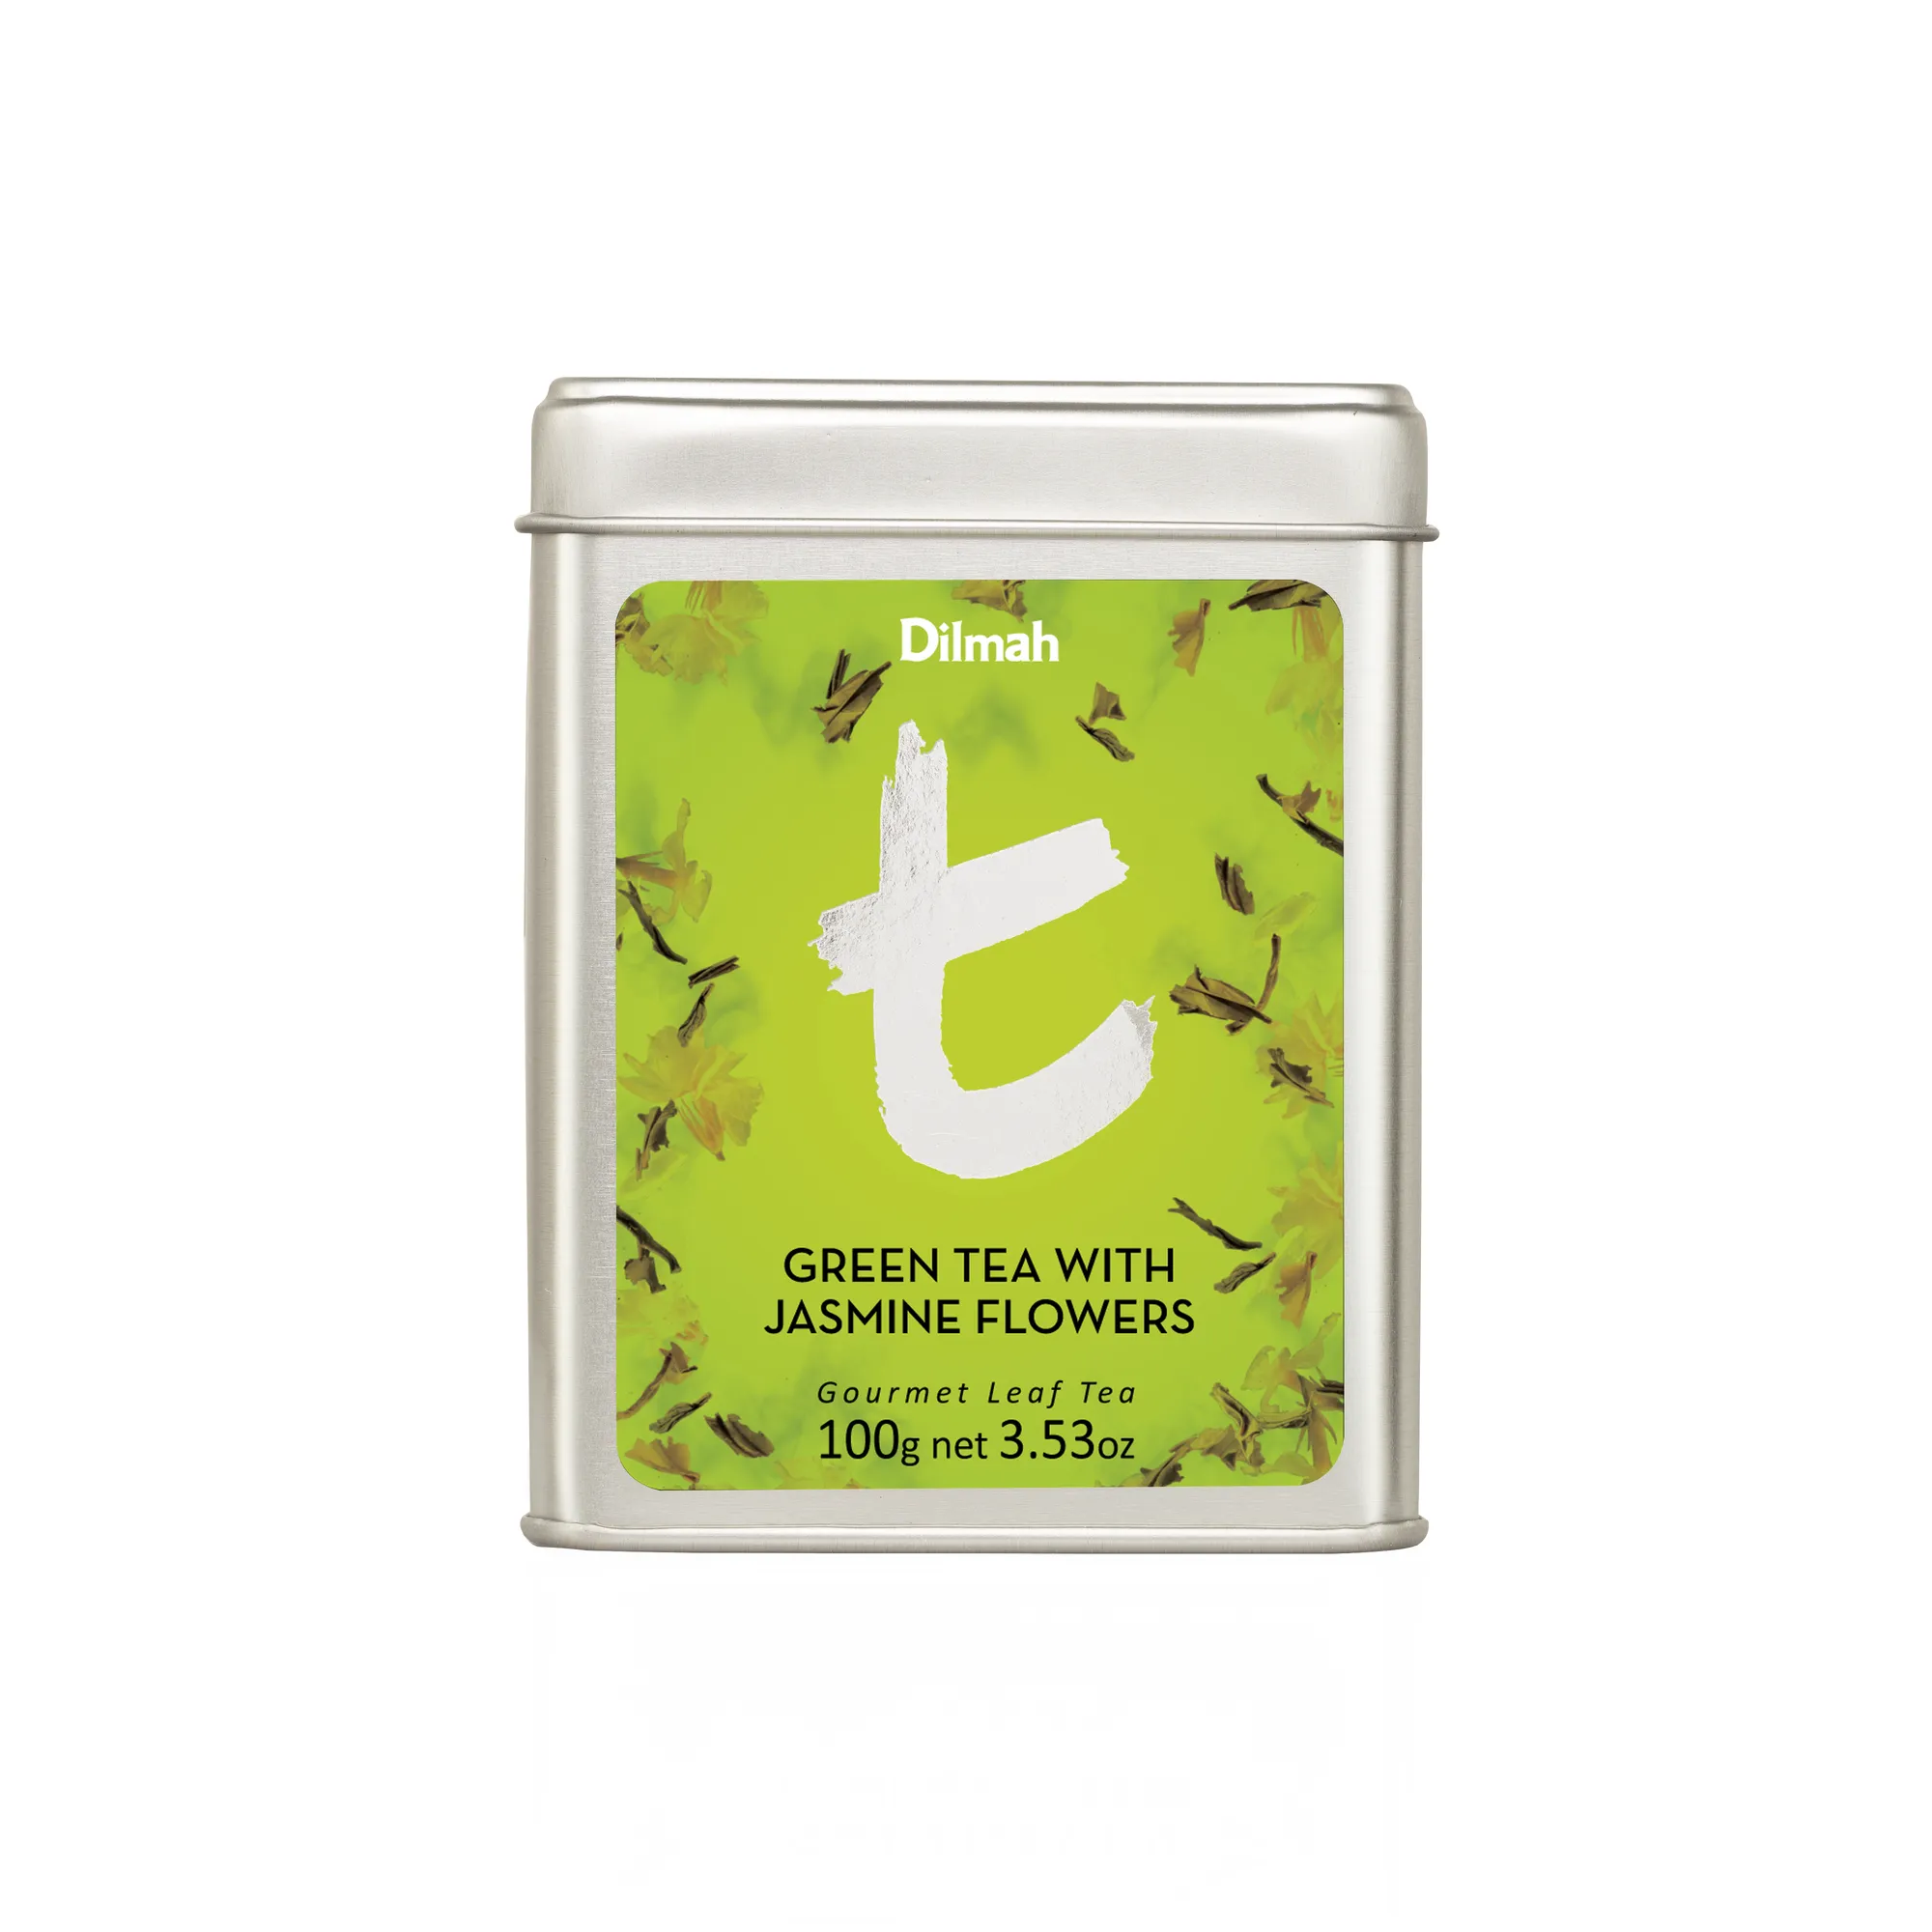 Loose leaf Green Tea with Jasmine Flowers in tin